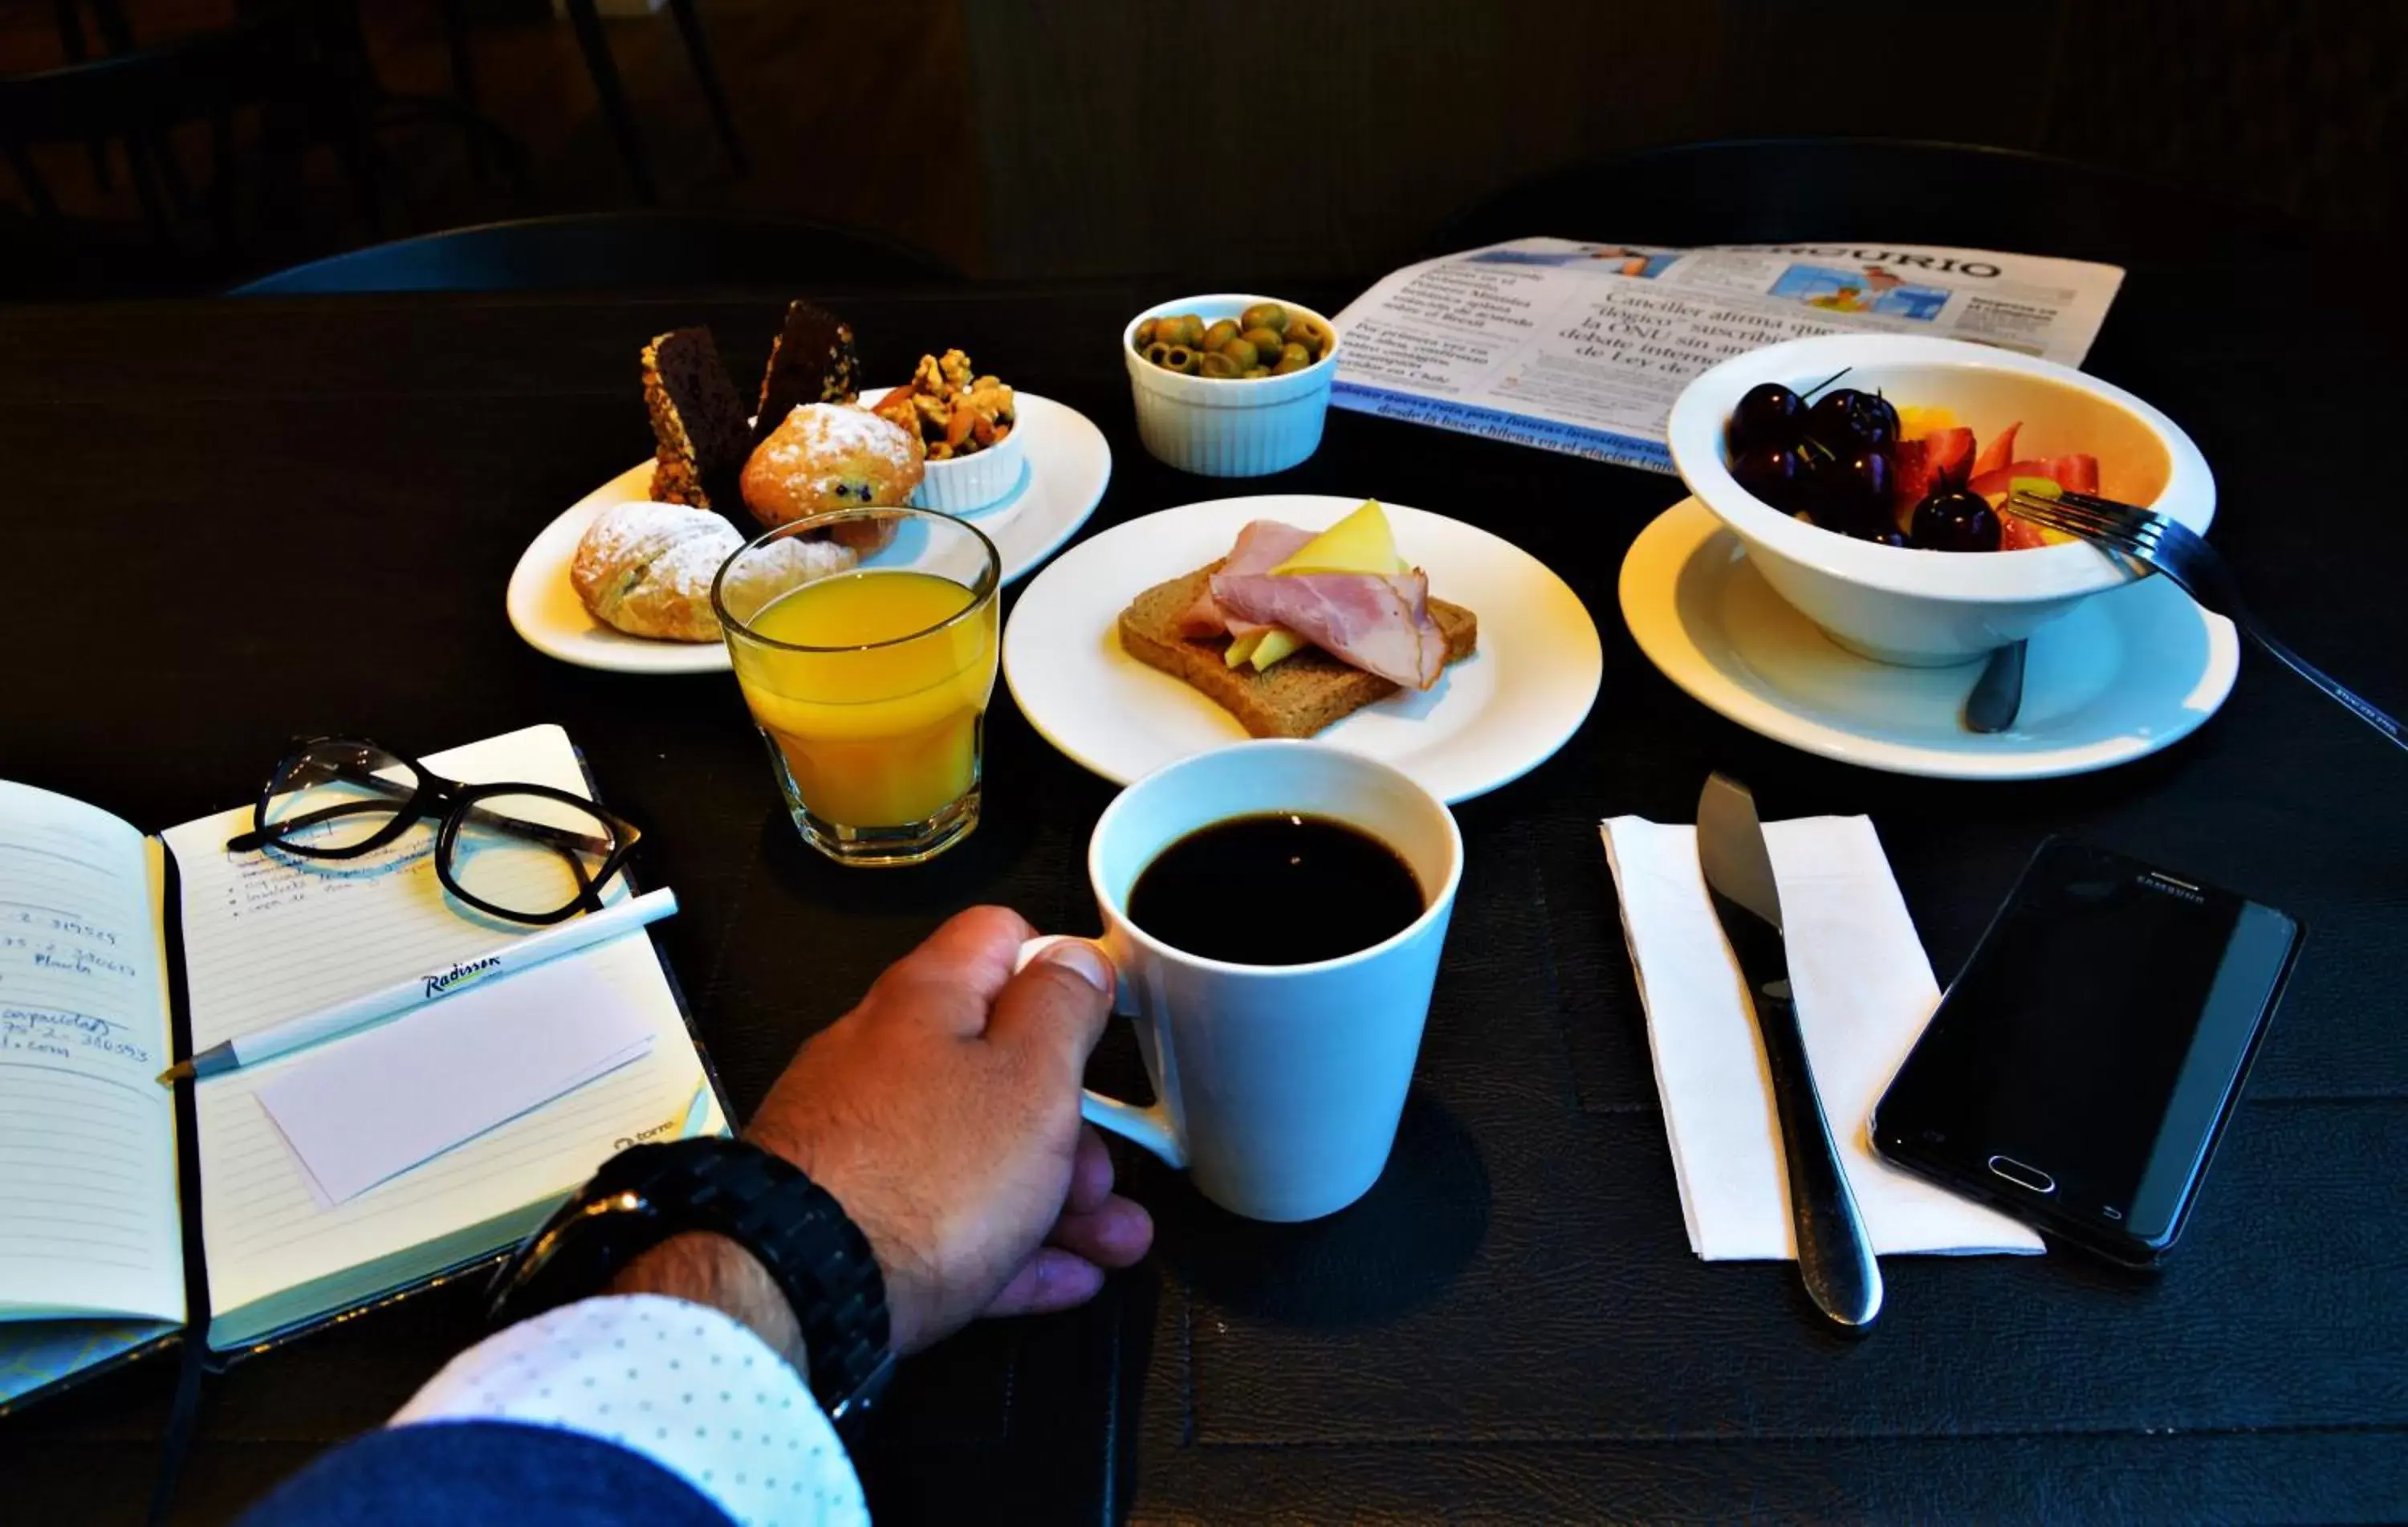 Breakfast in Radisson Hotel Curico